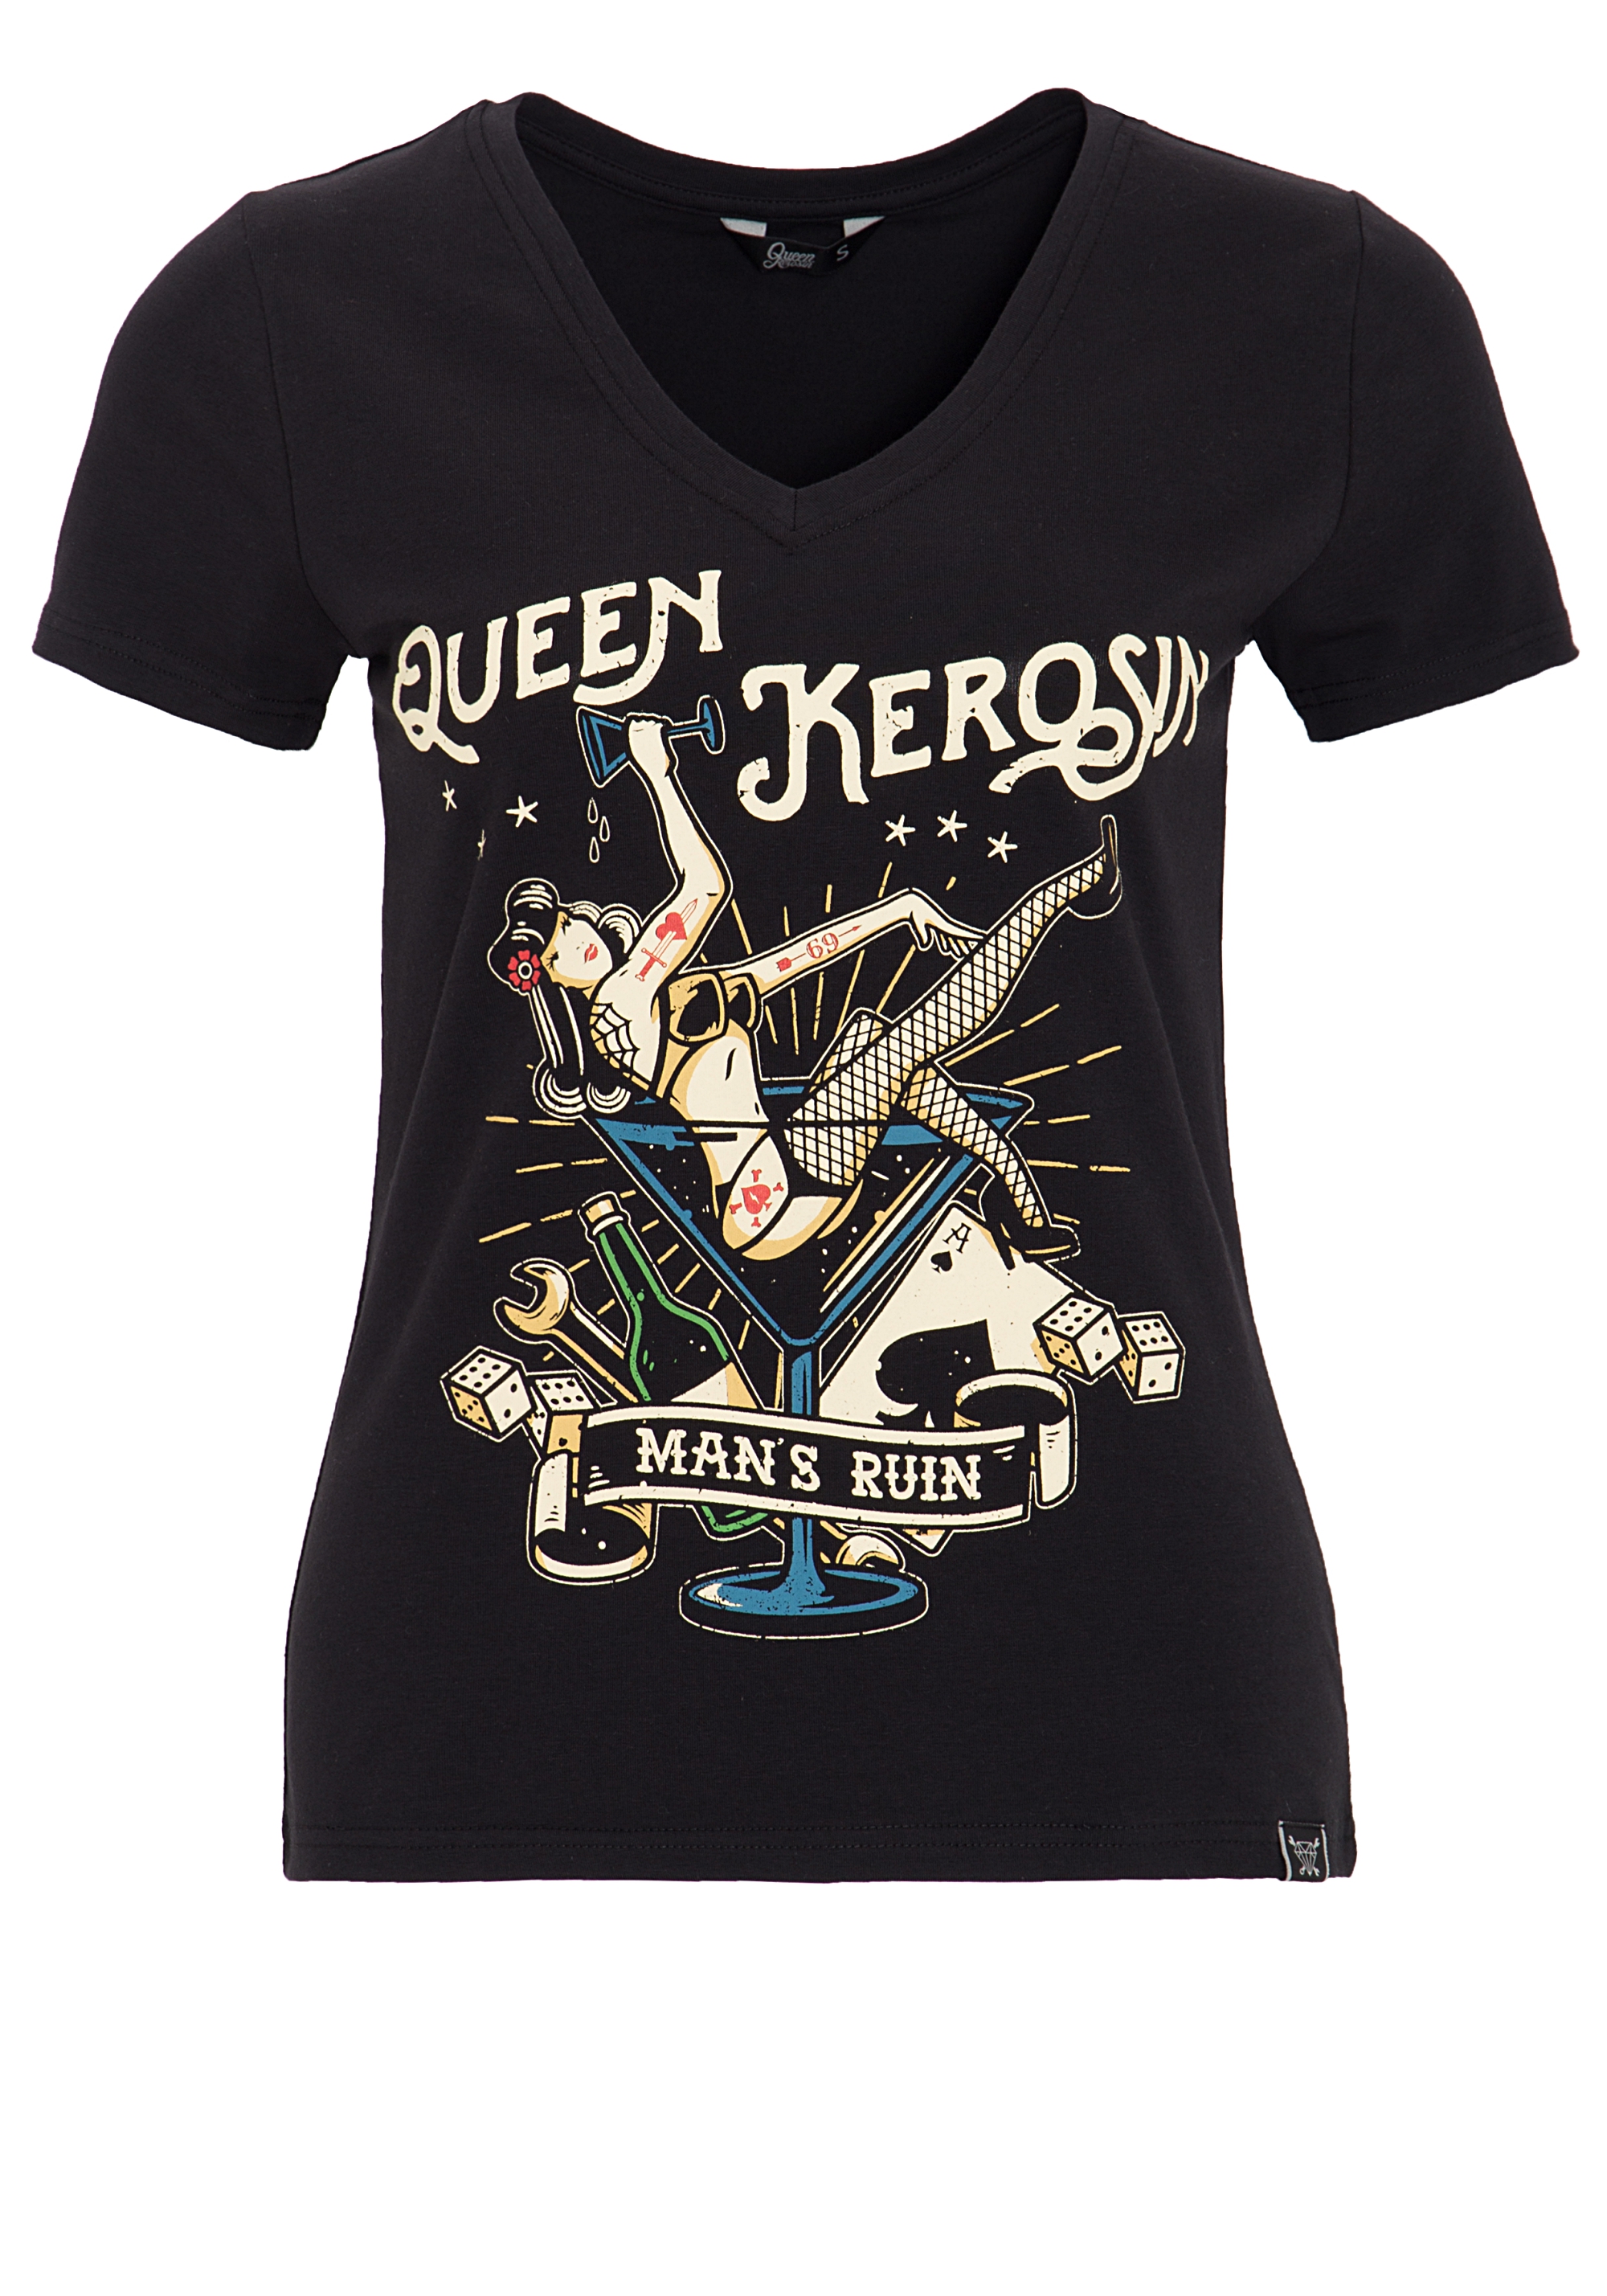 Queen Kerosin T-Shirt - Man´s Ruin XL